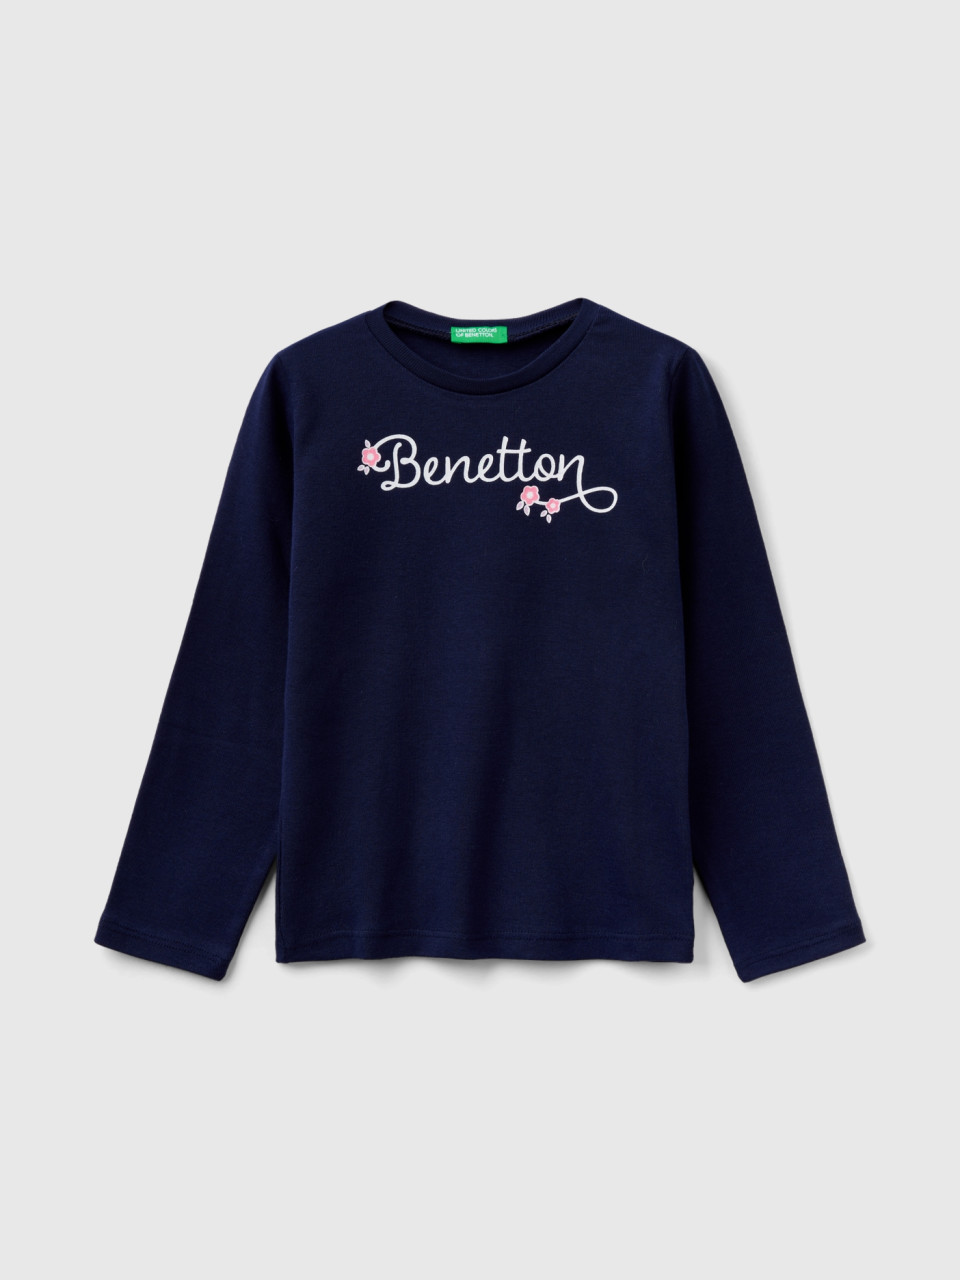 Benetton, T-shirt Manica Lunga Con Stampa Glitter, Blu Scuro, Bambini